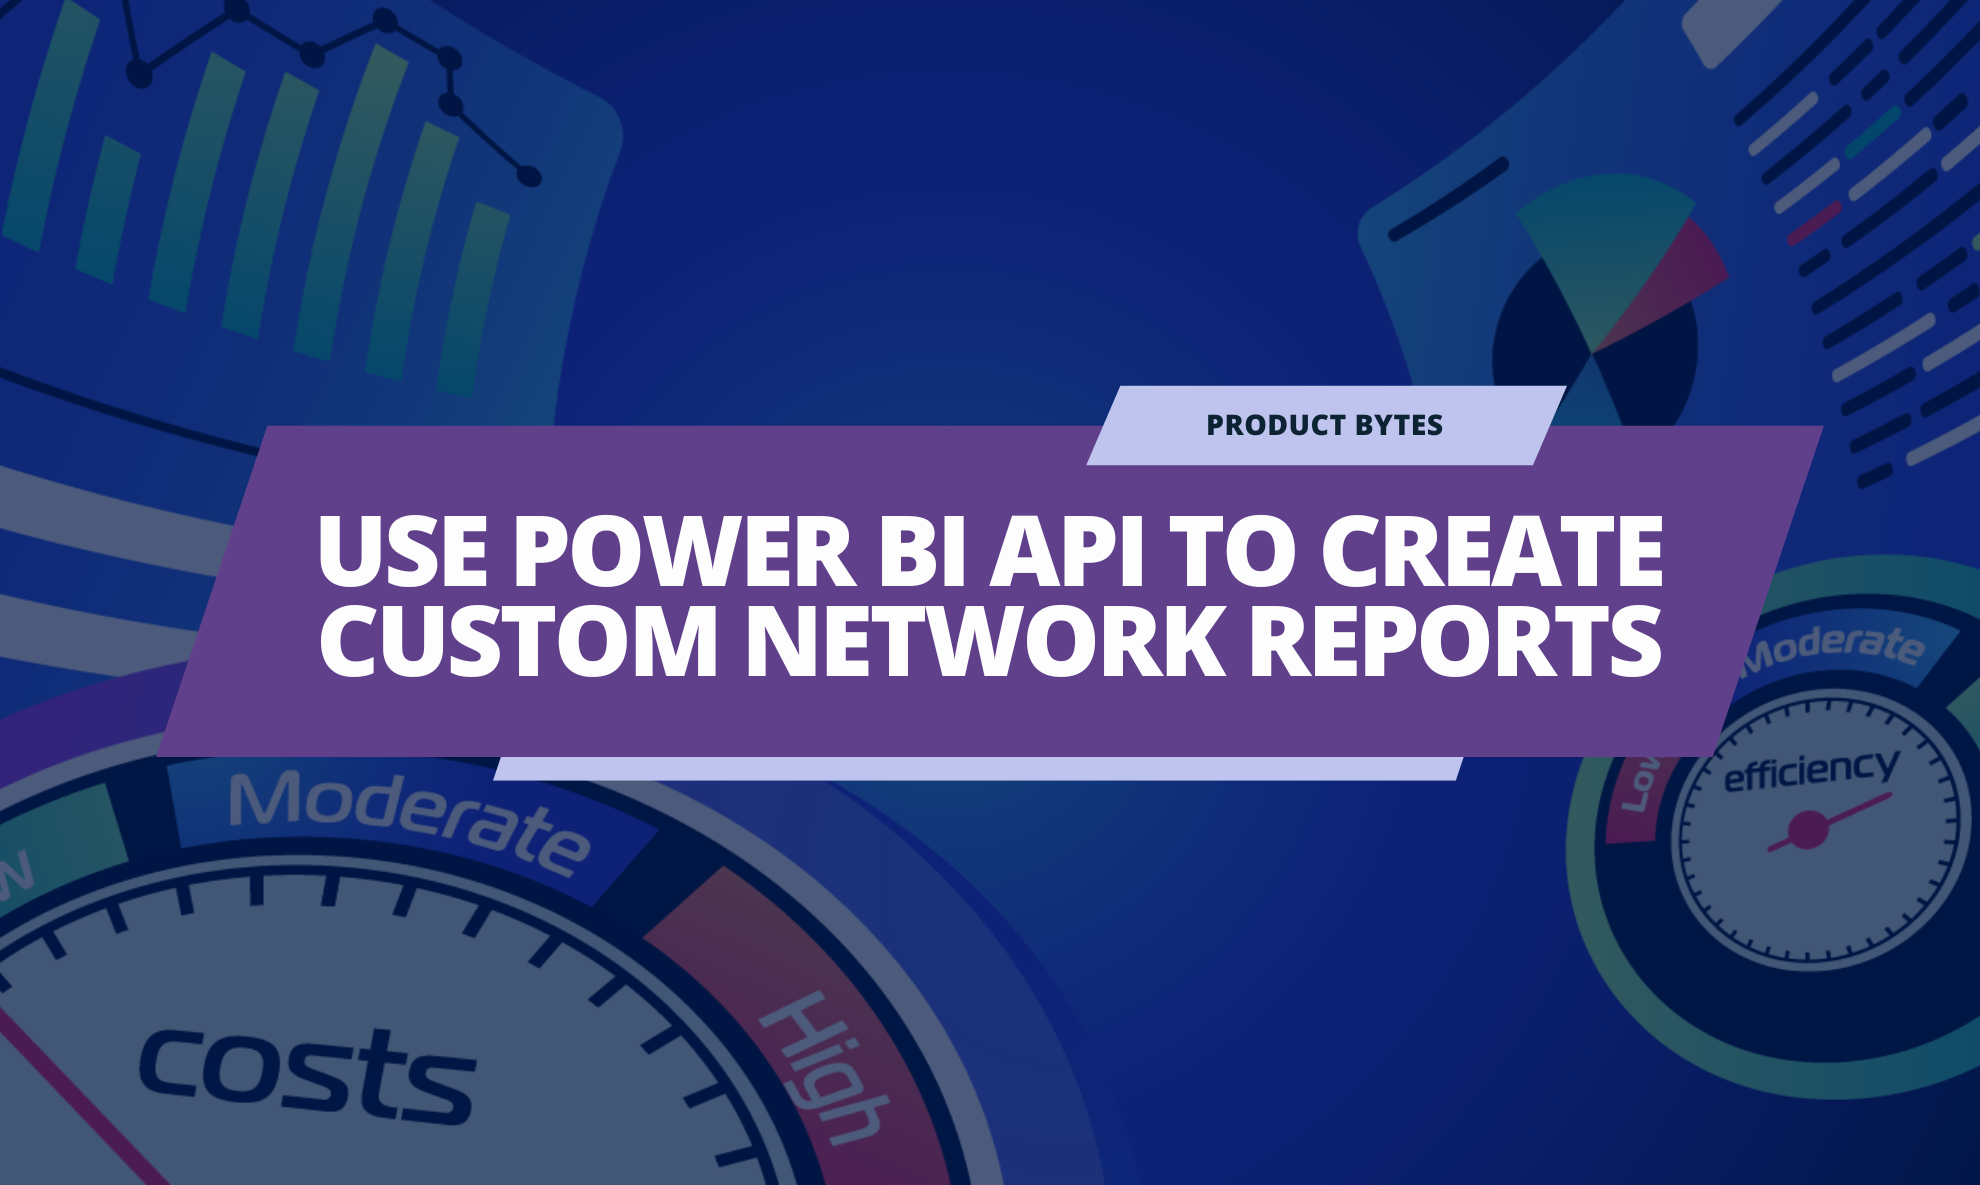 Using Power BI API to create custom network reports